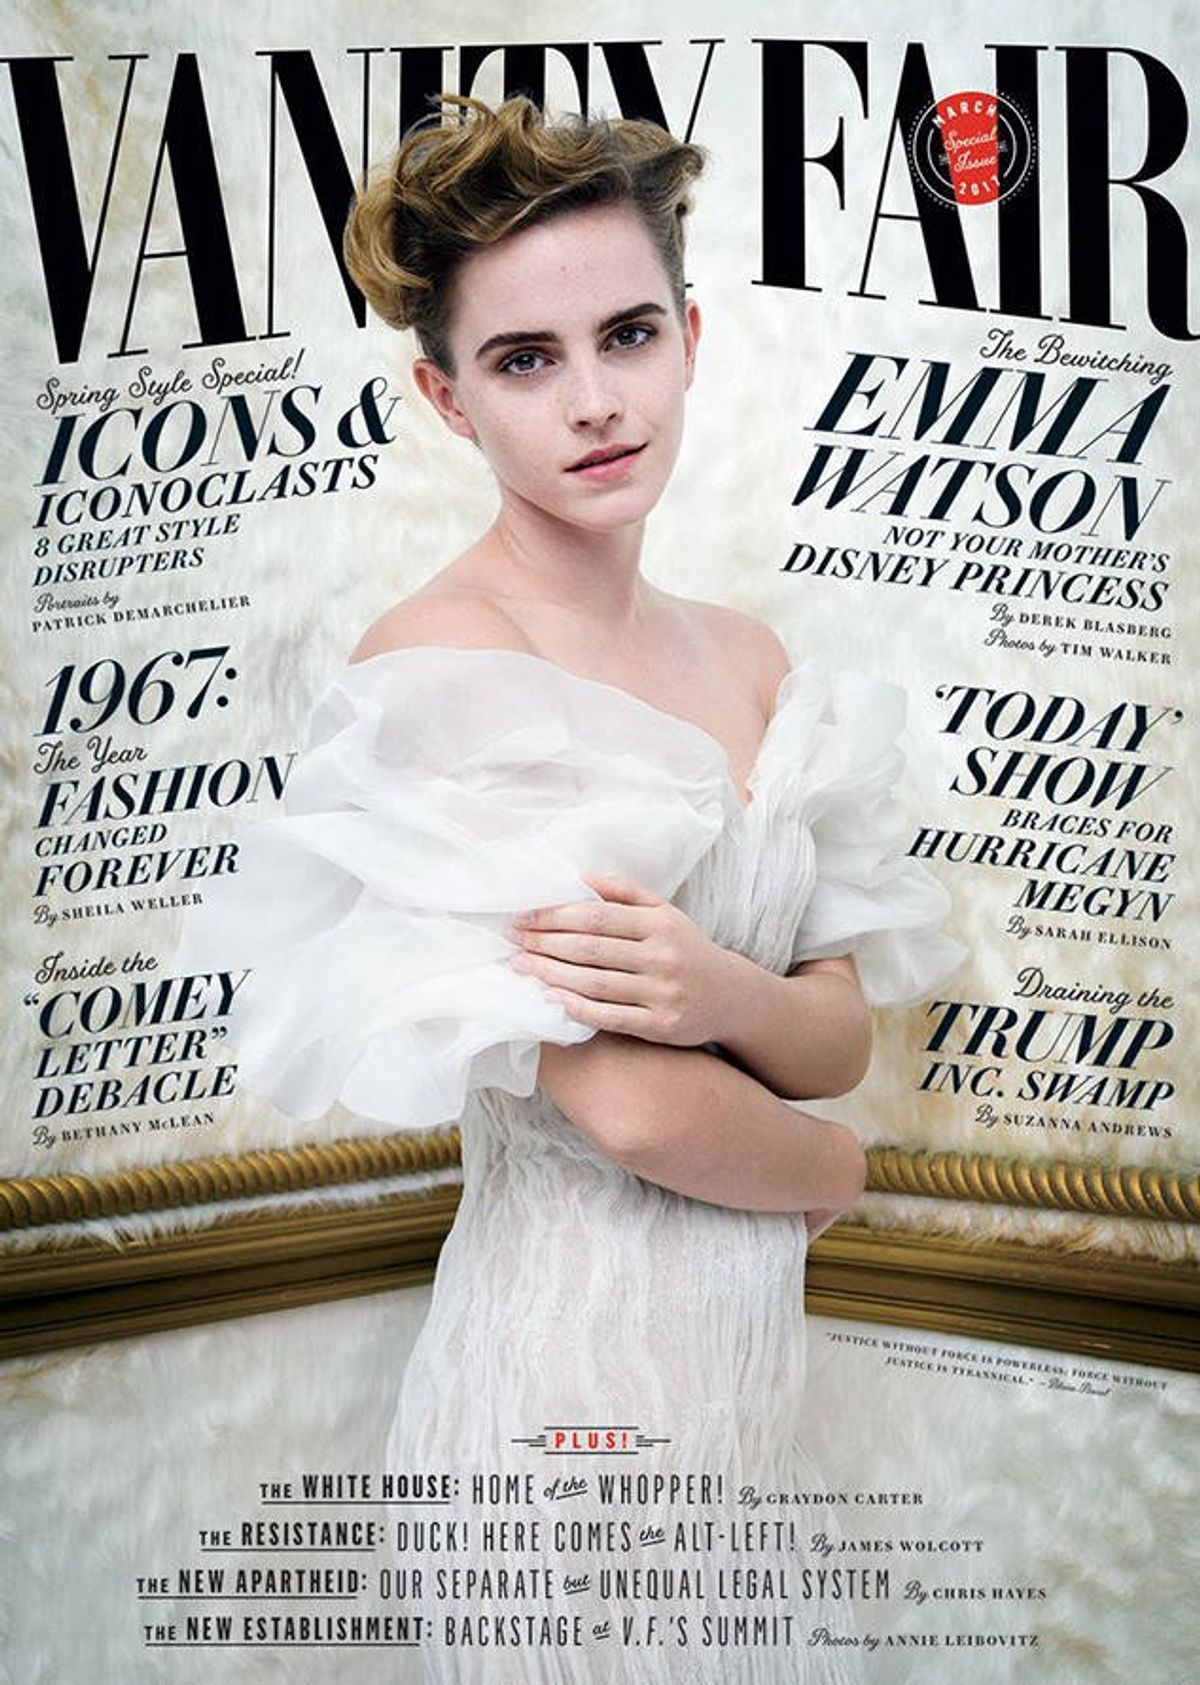 Emma Watson: Feminist or Nah?